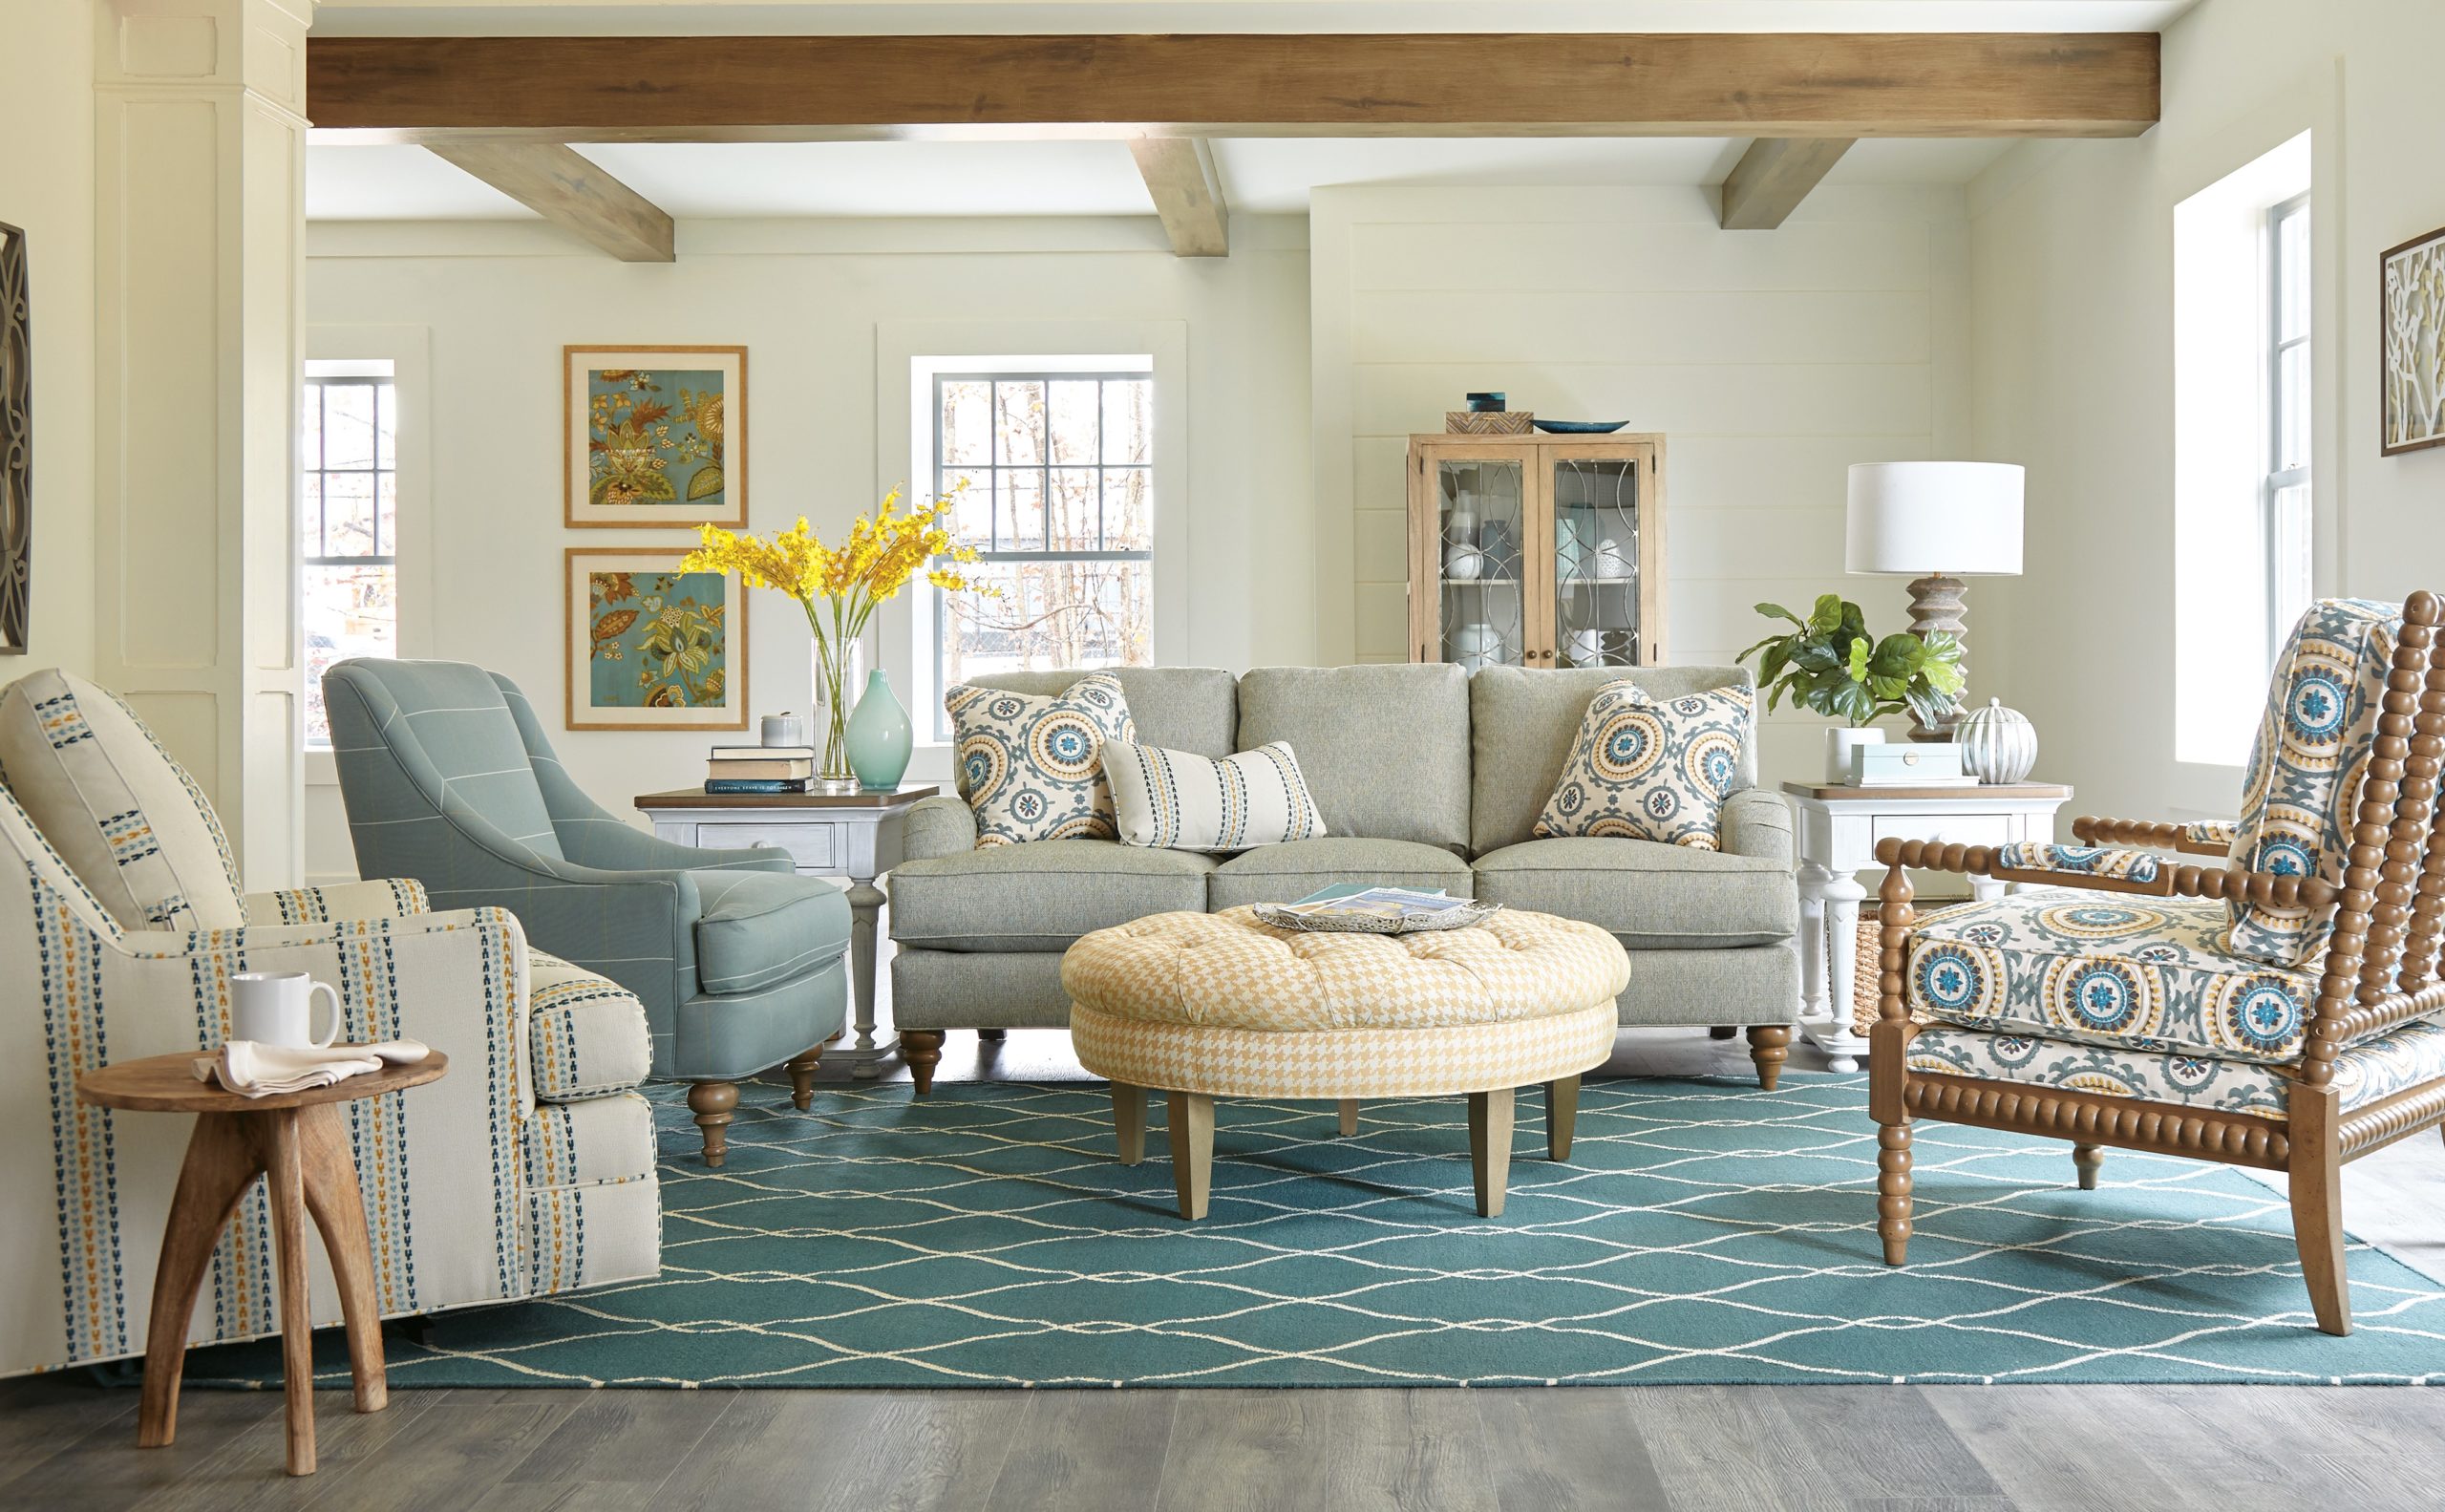 Living Room Sofa Chairs and ottomon